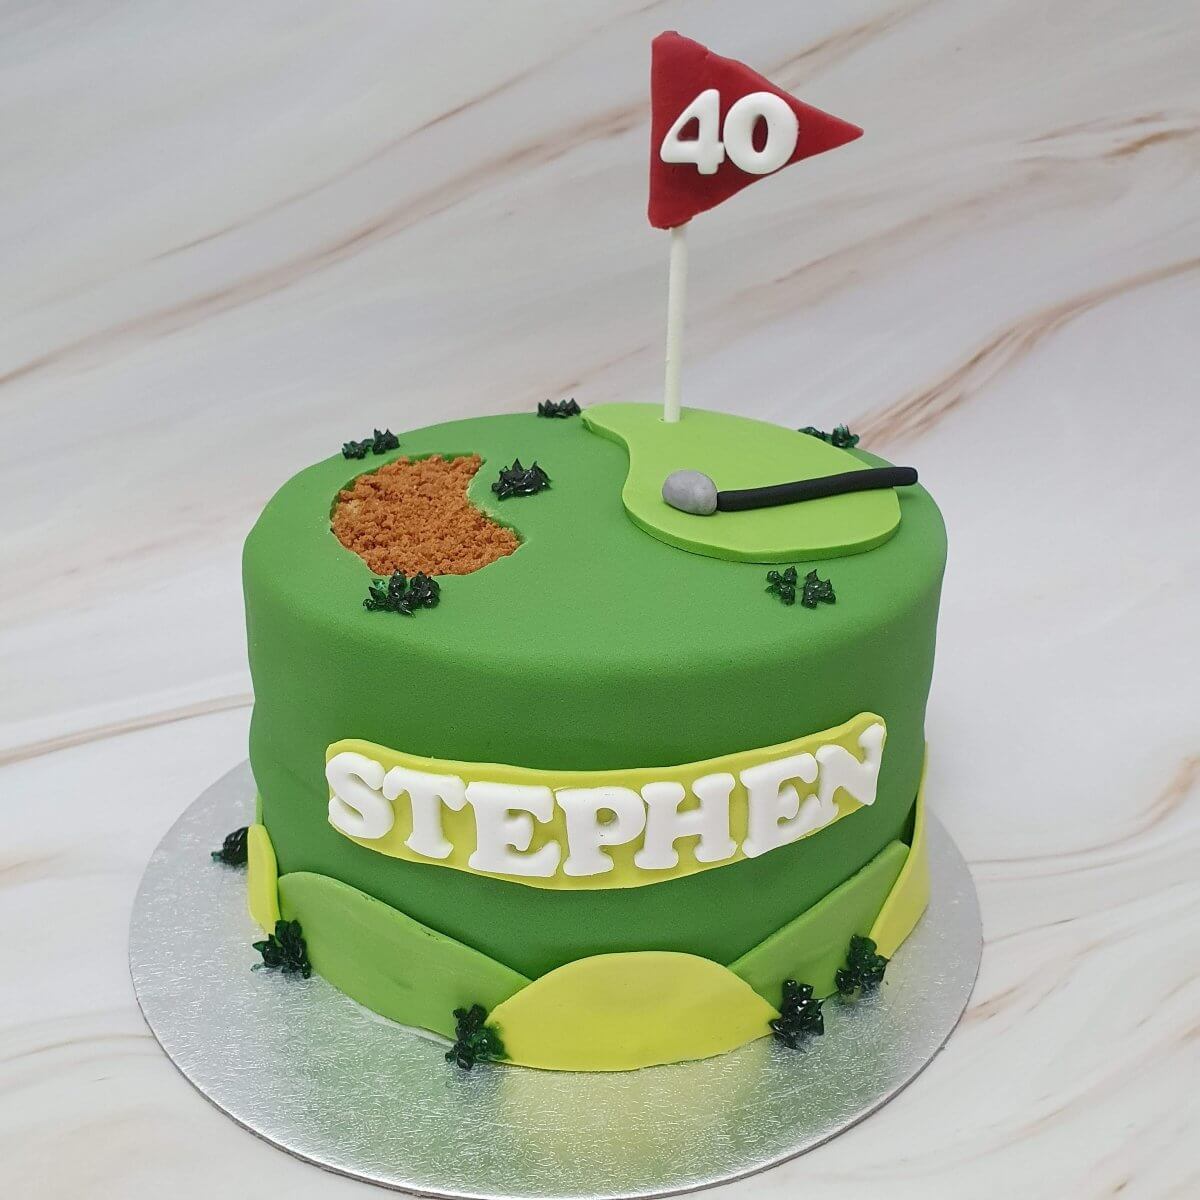 30+ Creative Photo of Golf Birthday Cakes - davemelillo.com | Golf birthday  cakes, Golf grooms cake, Golf cake